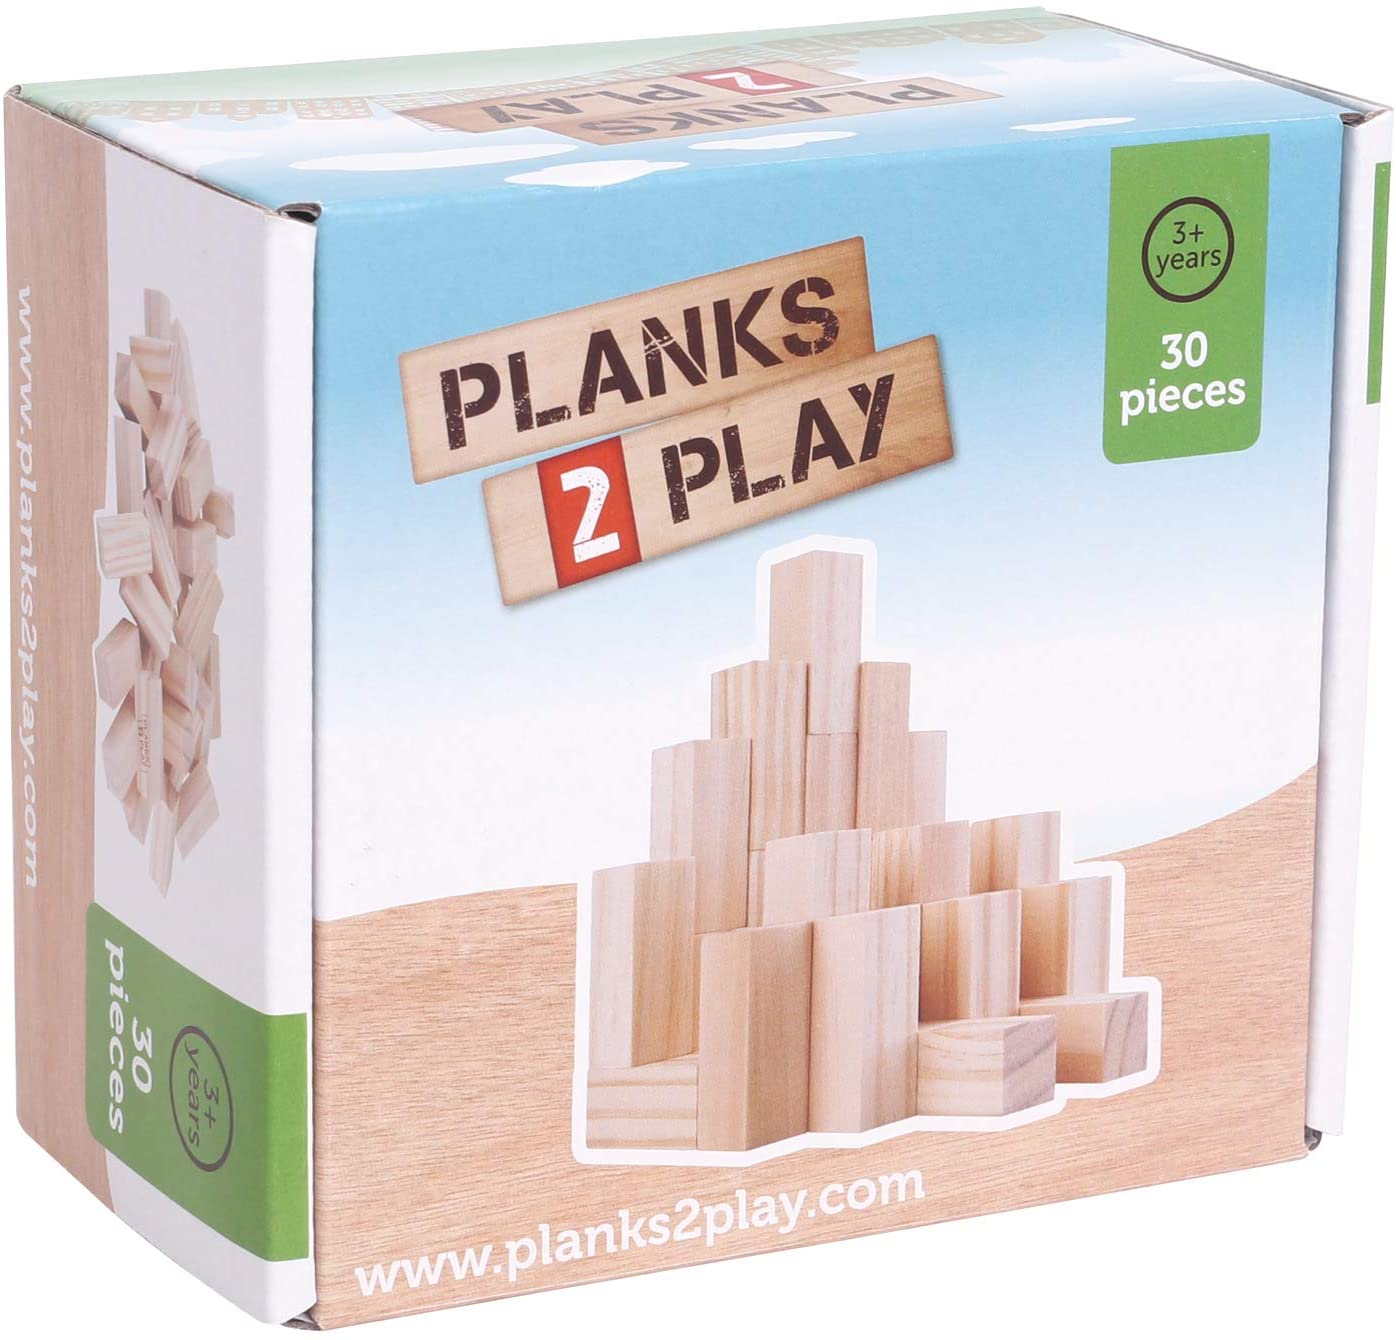 Planks 2 Play - 30 Small Wooden Pillars